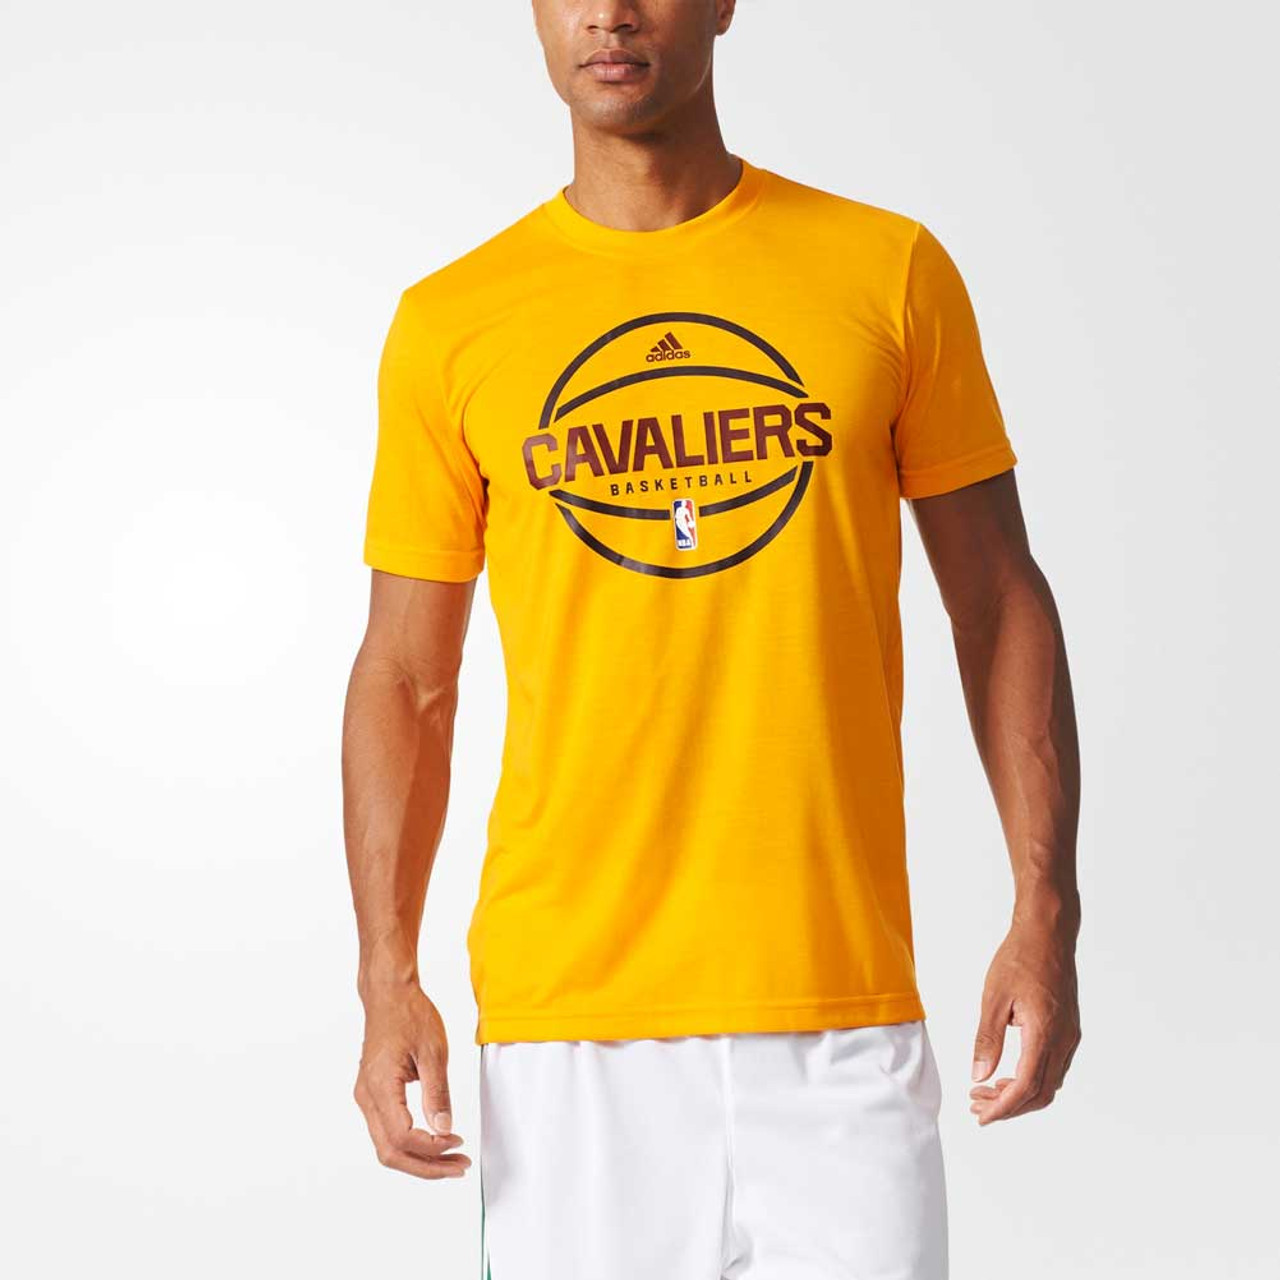 Prima Fresco componente ADIDAS cleveland cavaliers basketball summer run shooter t-shirt [yellow]